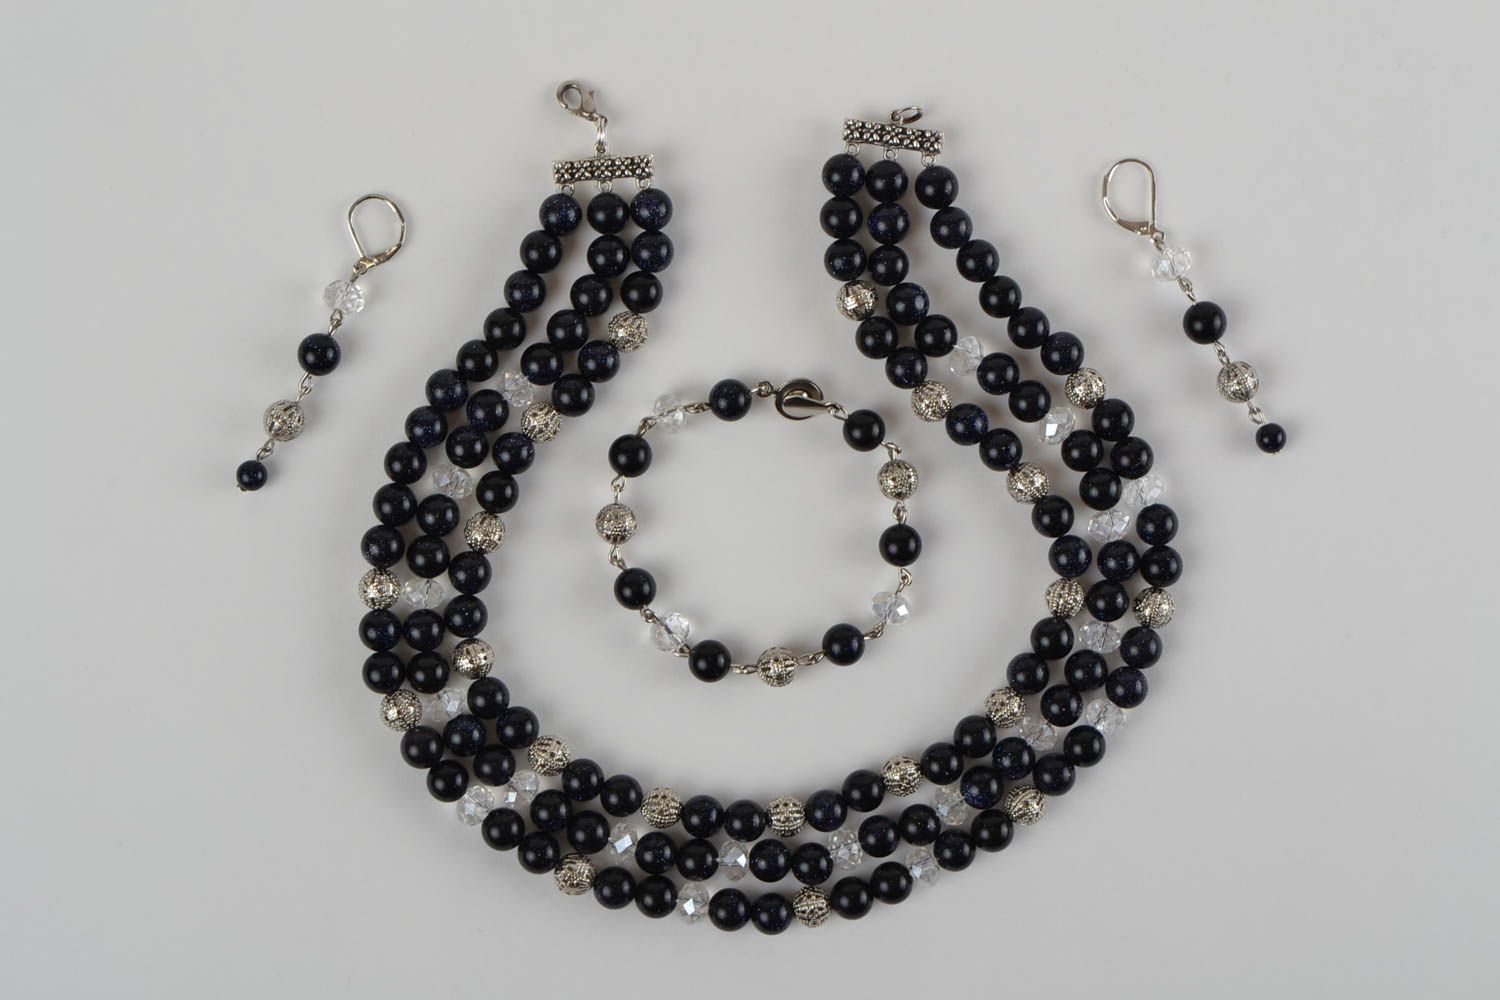 Handmade crystal bead and aventurine jewelry set earrings necklace and bracelet photo 5